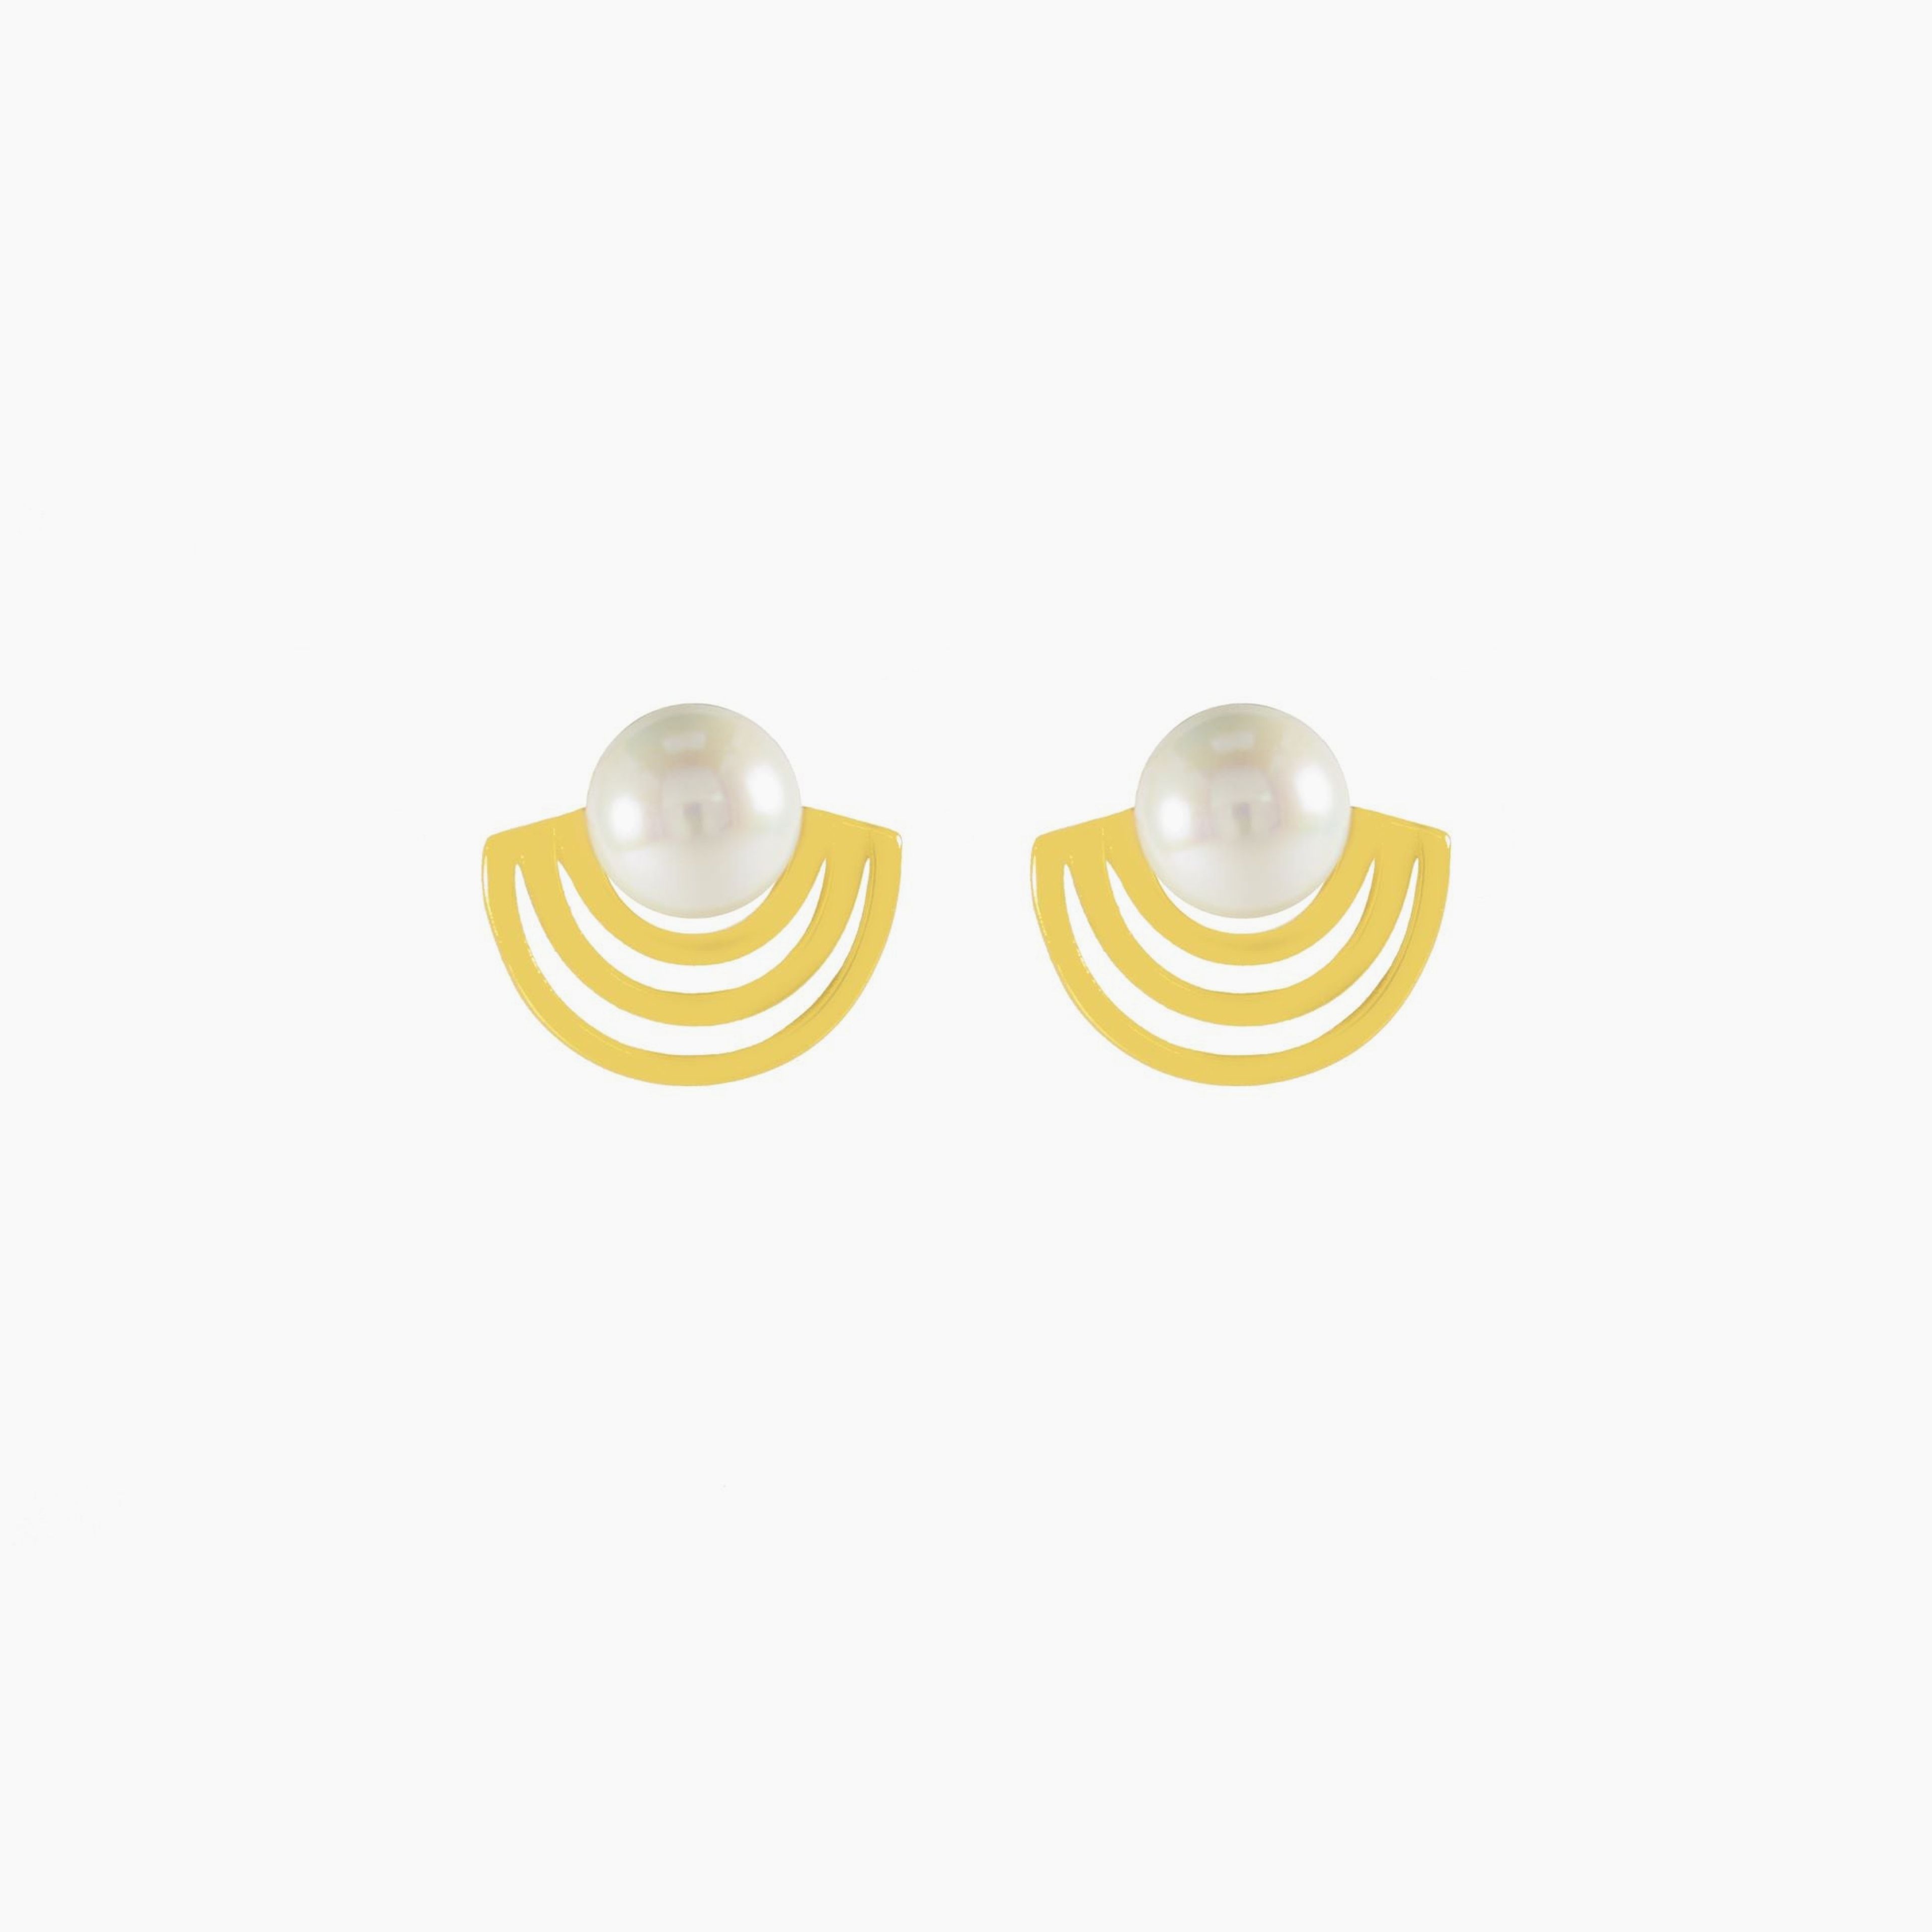 Radiate Pearl Stud Earrings, 18k Gold Plated Sterling Silver